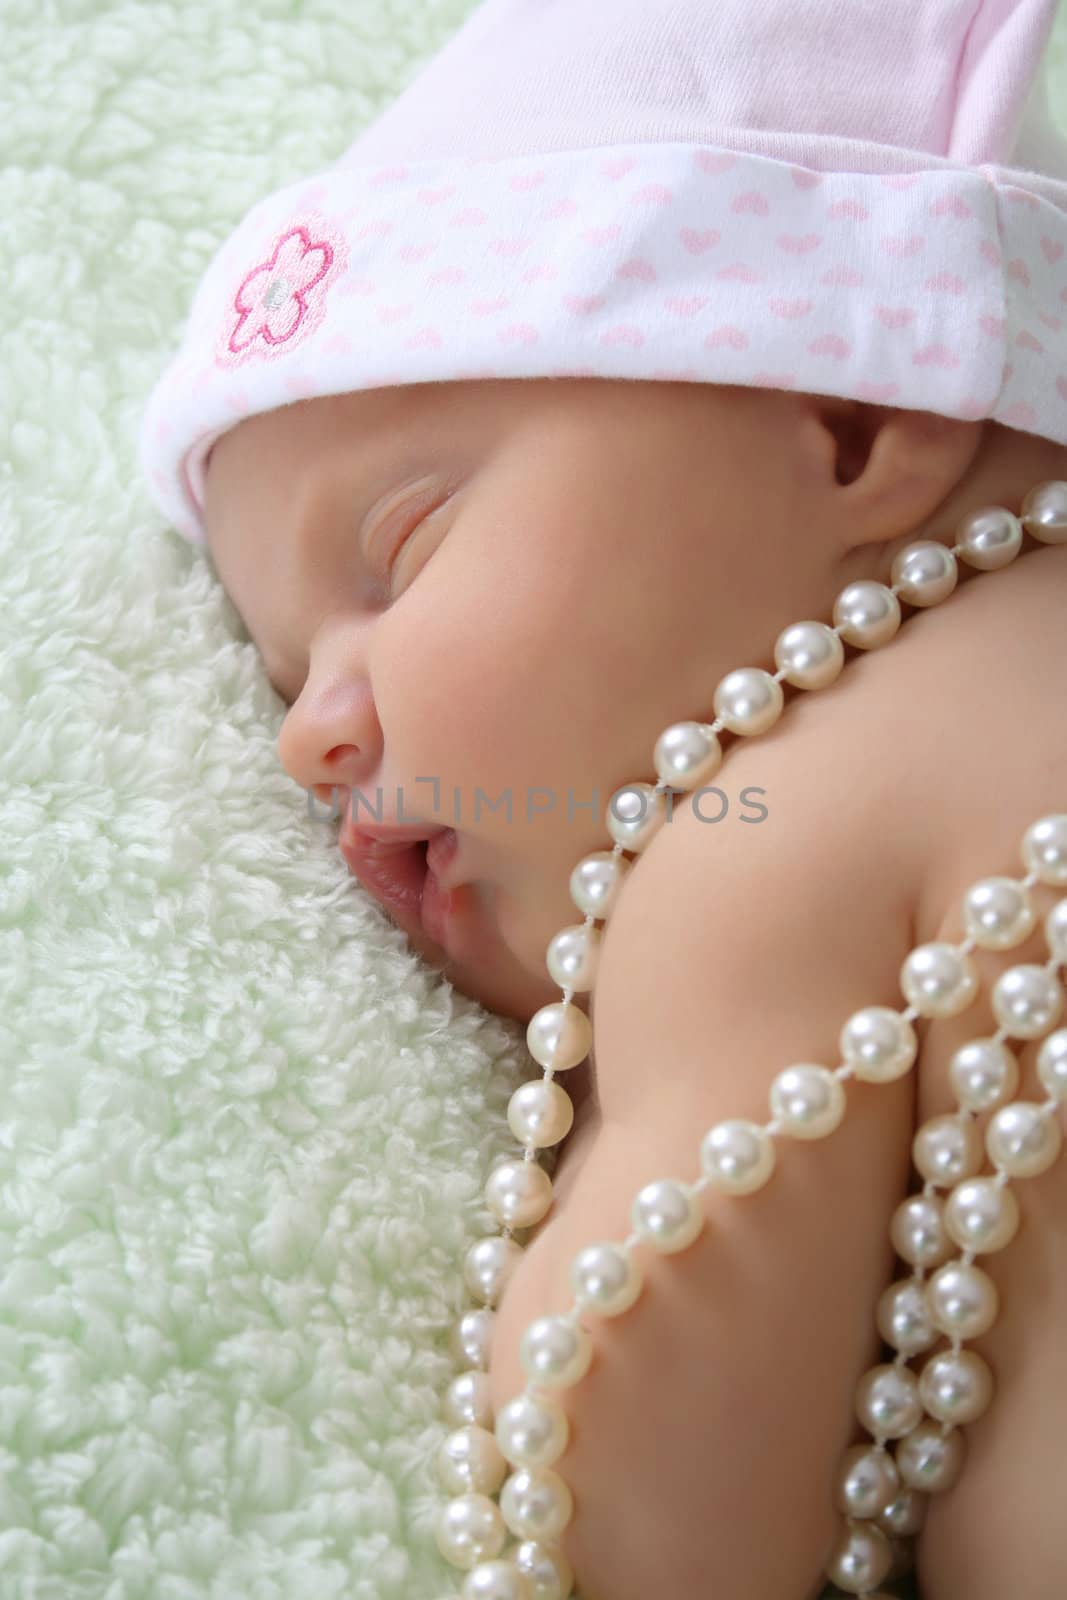 Sleeping Newborn by vanell